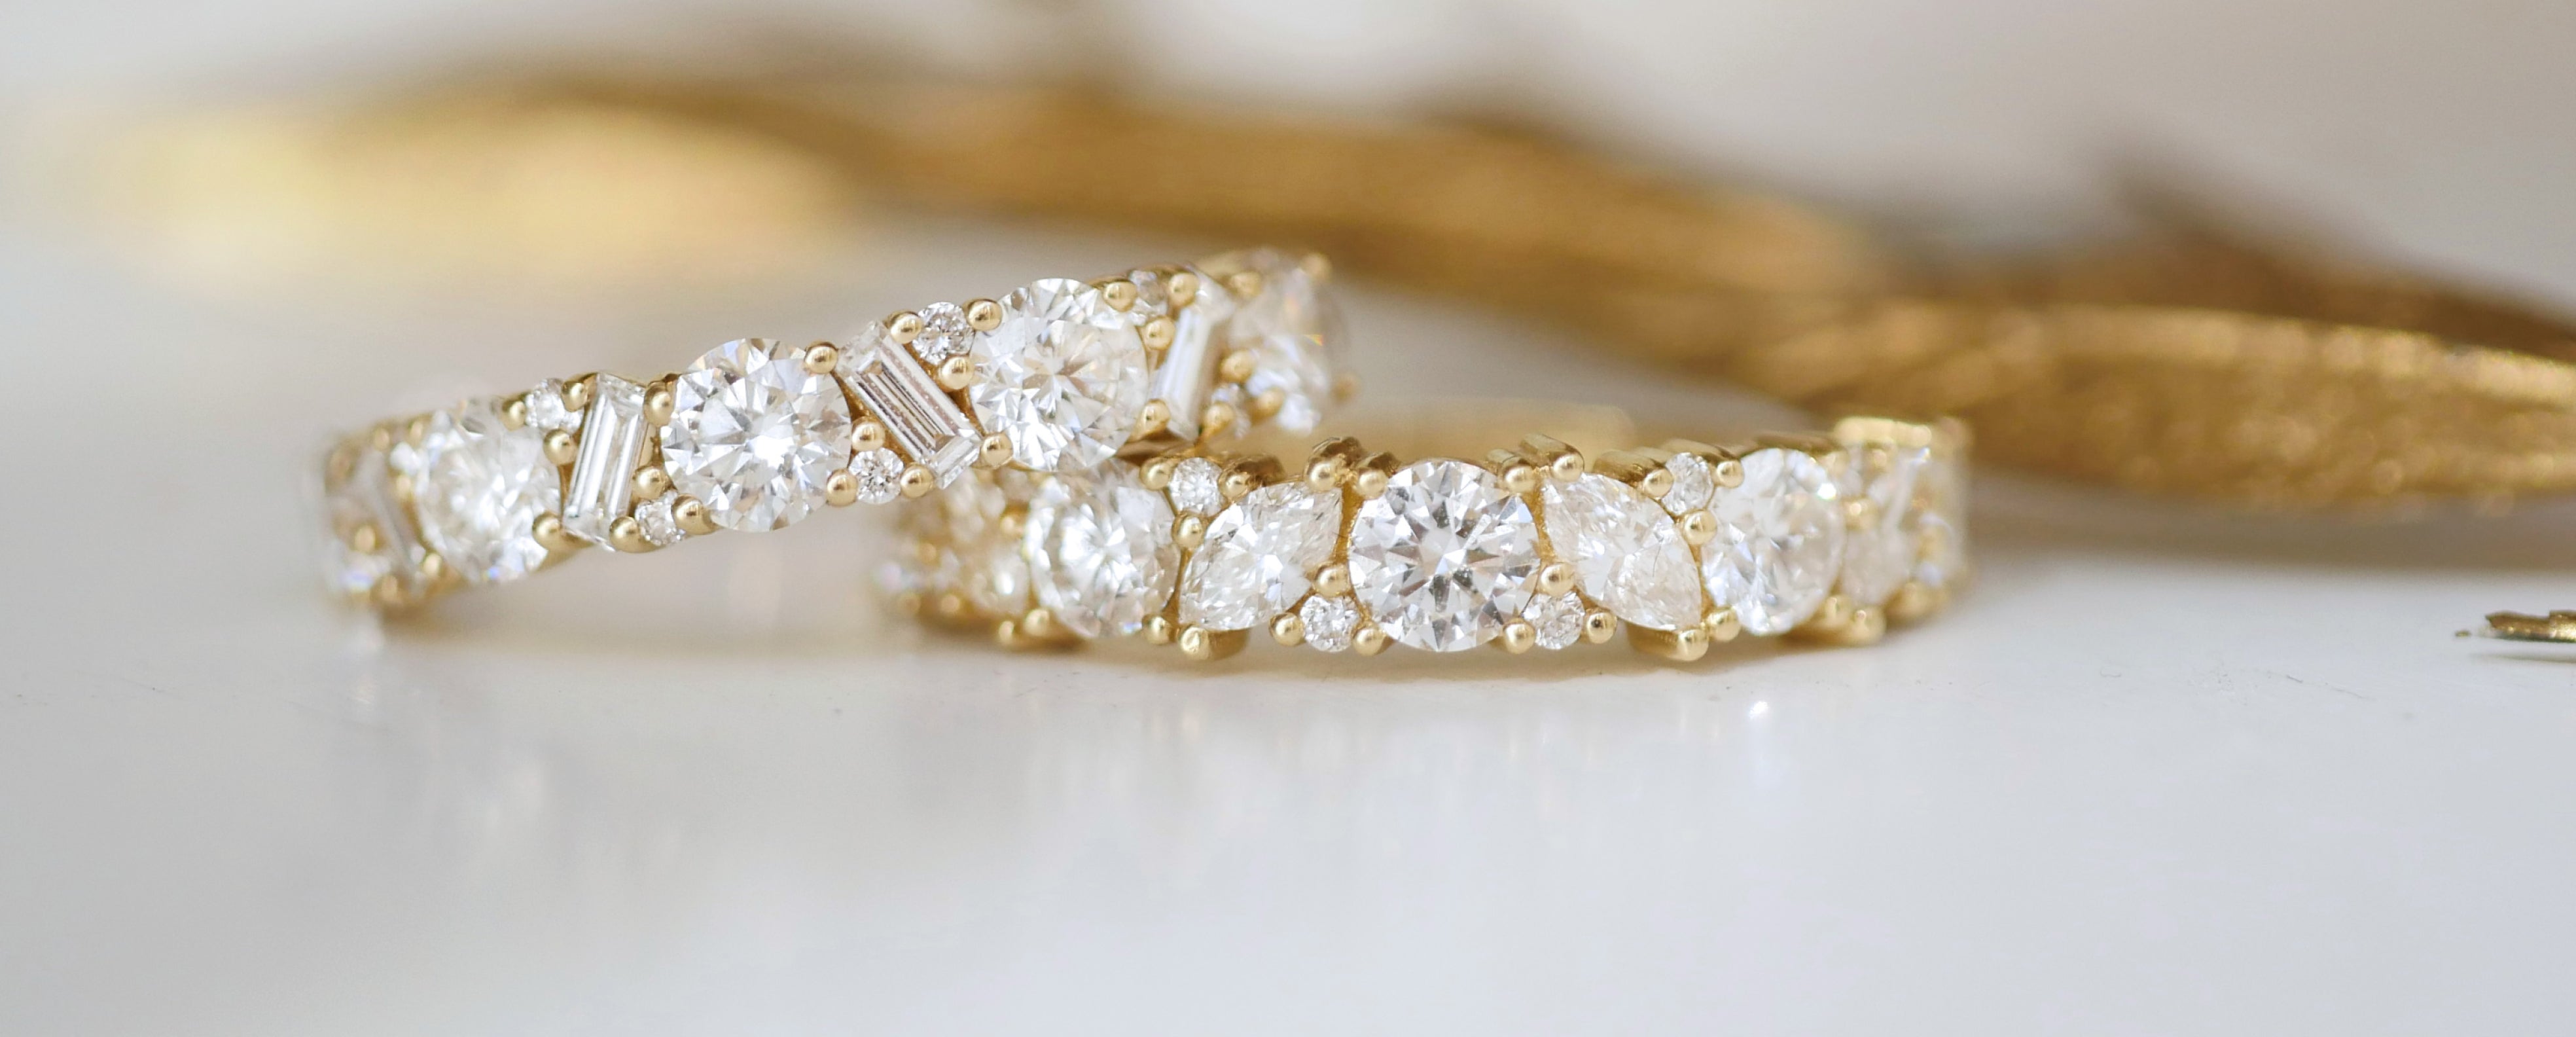 Joseph Nelson Jewelry Wedding Rings